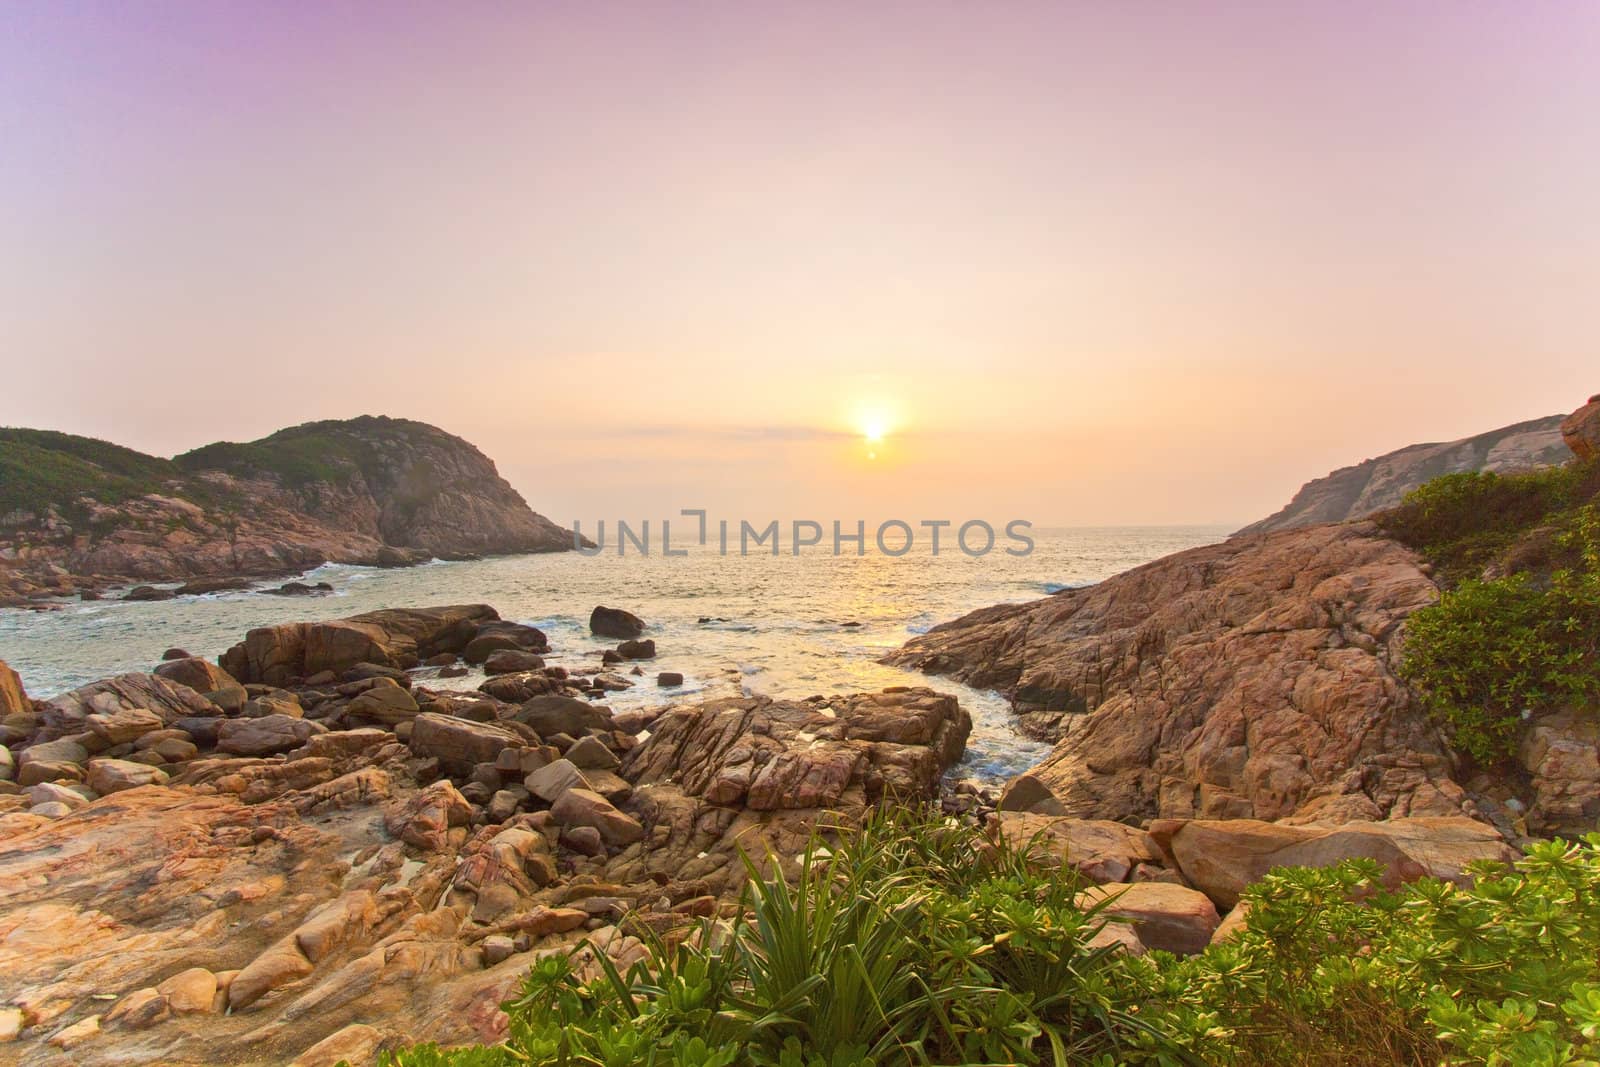 Sea rocks along the coast under sunrise by kawing921